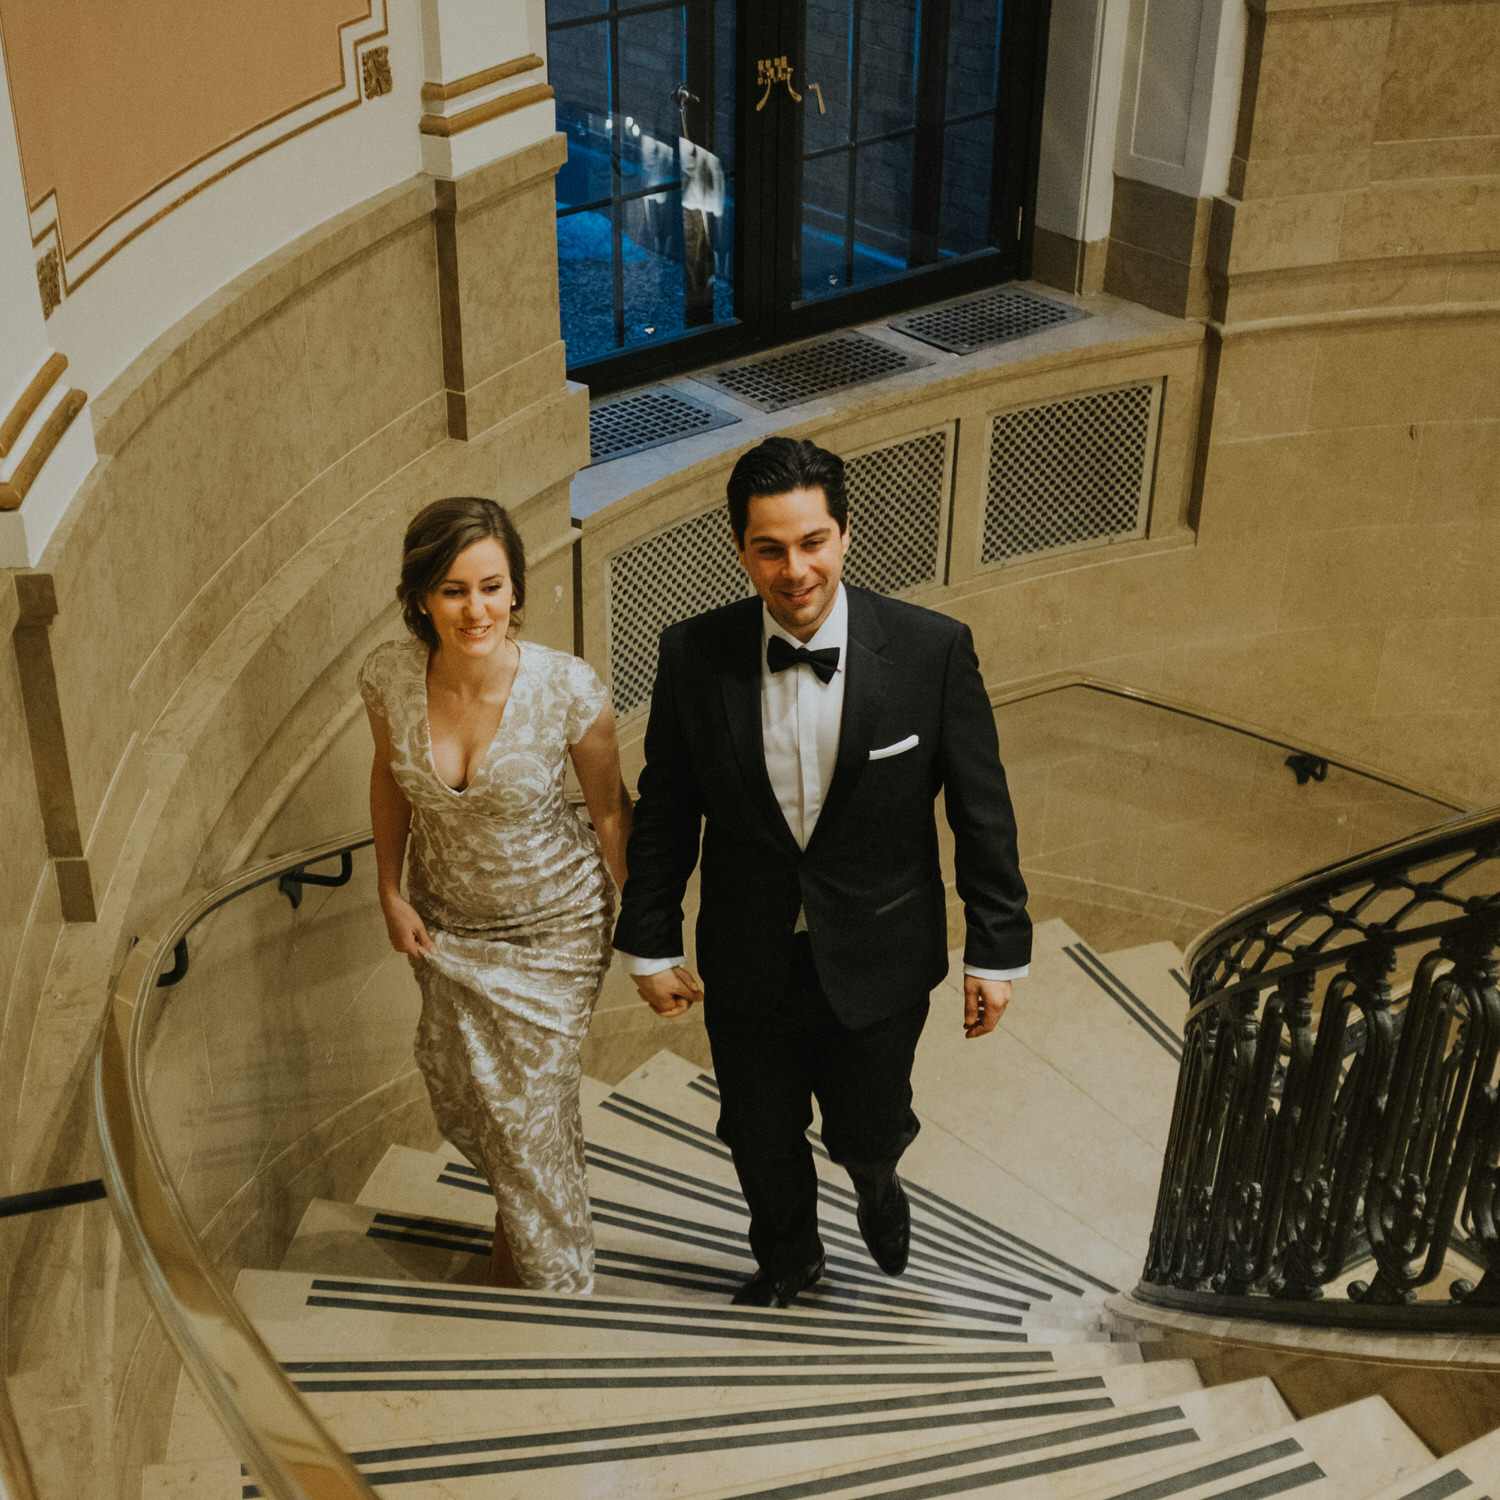 Quebec City bride and groom elopement